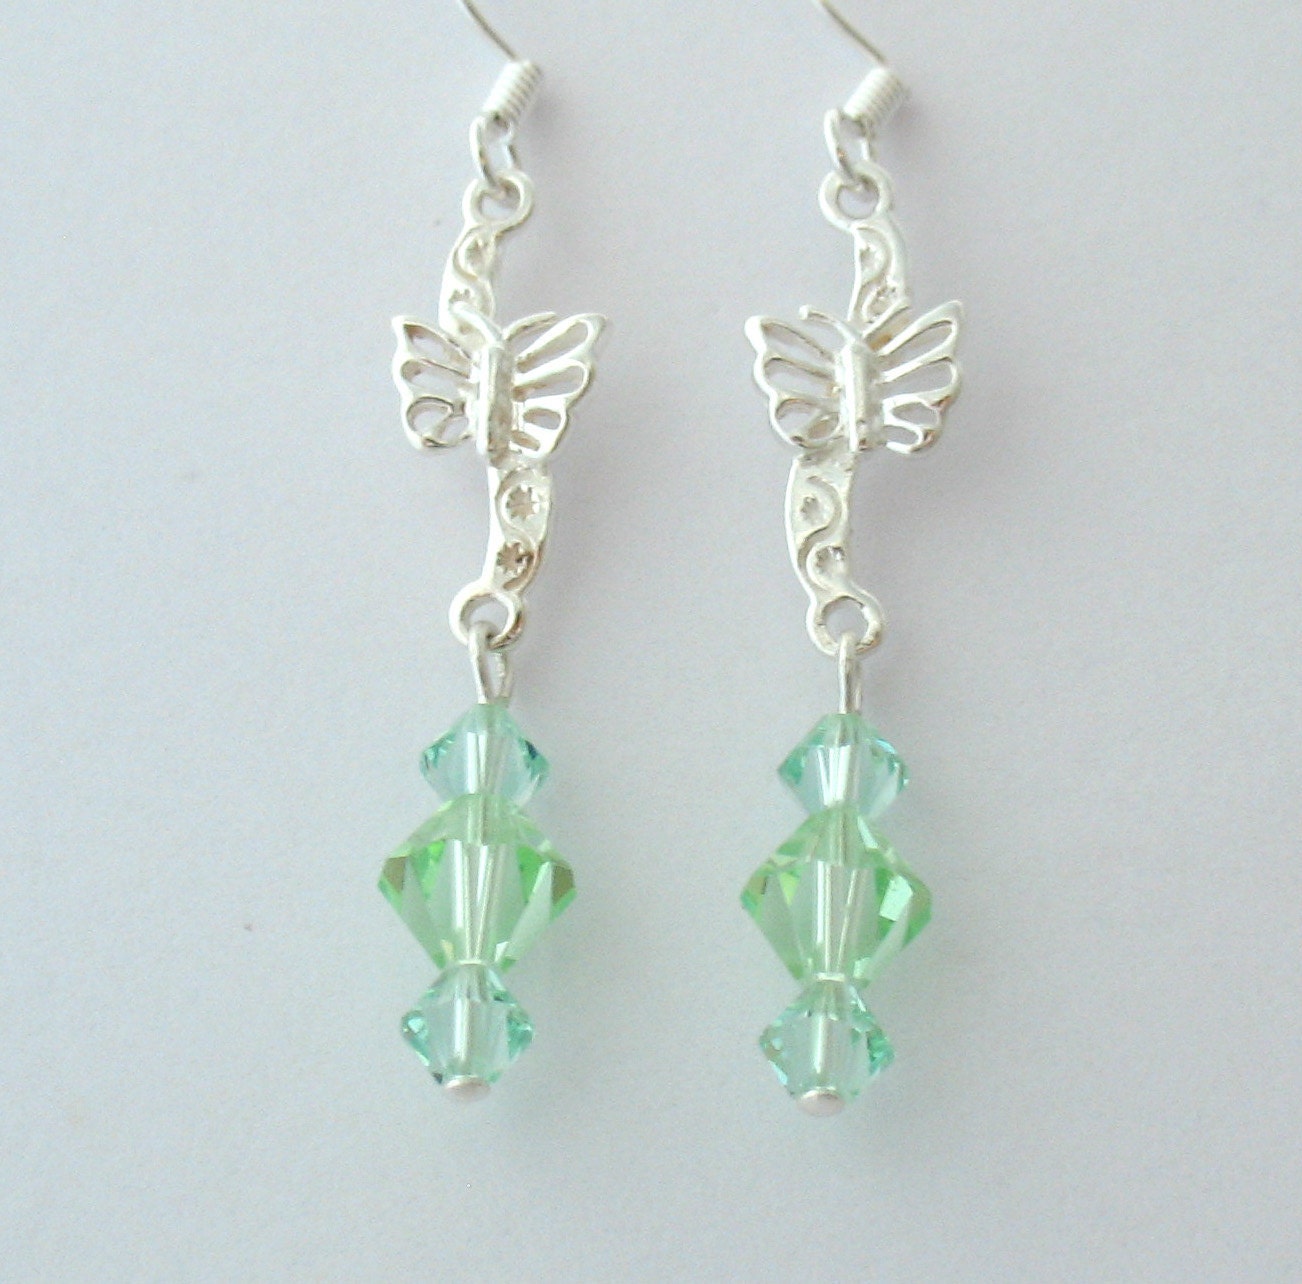 Crystal Butterfly Earrings, Mint Green Swarovski Crystallized Elements, Sterling Silver